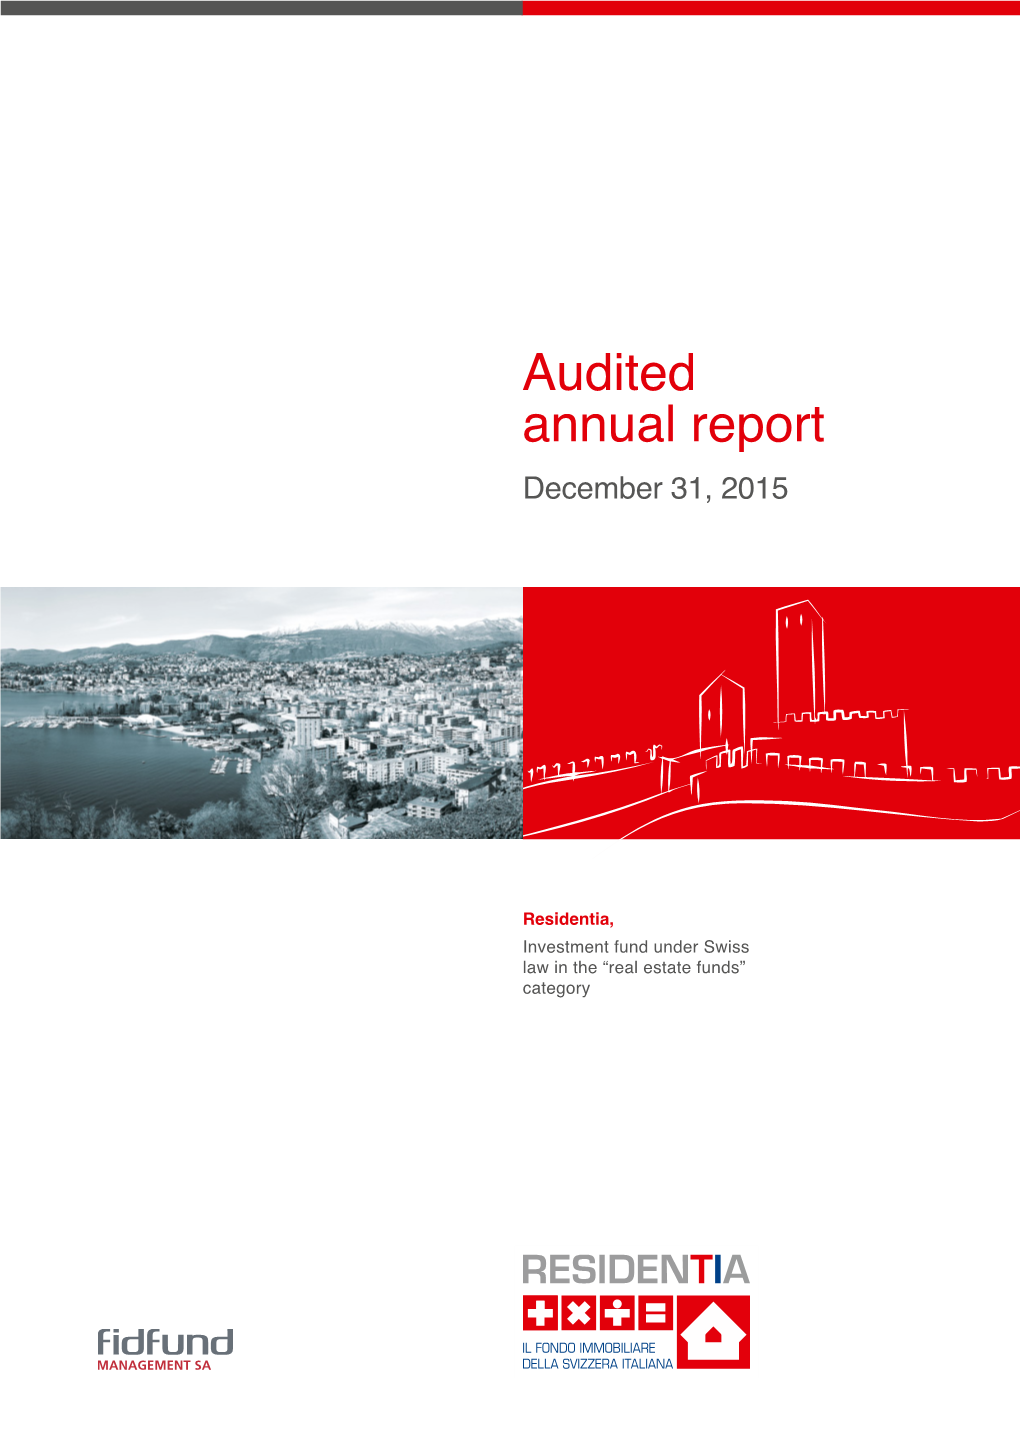 Audited Annual Report December 31, 2015